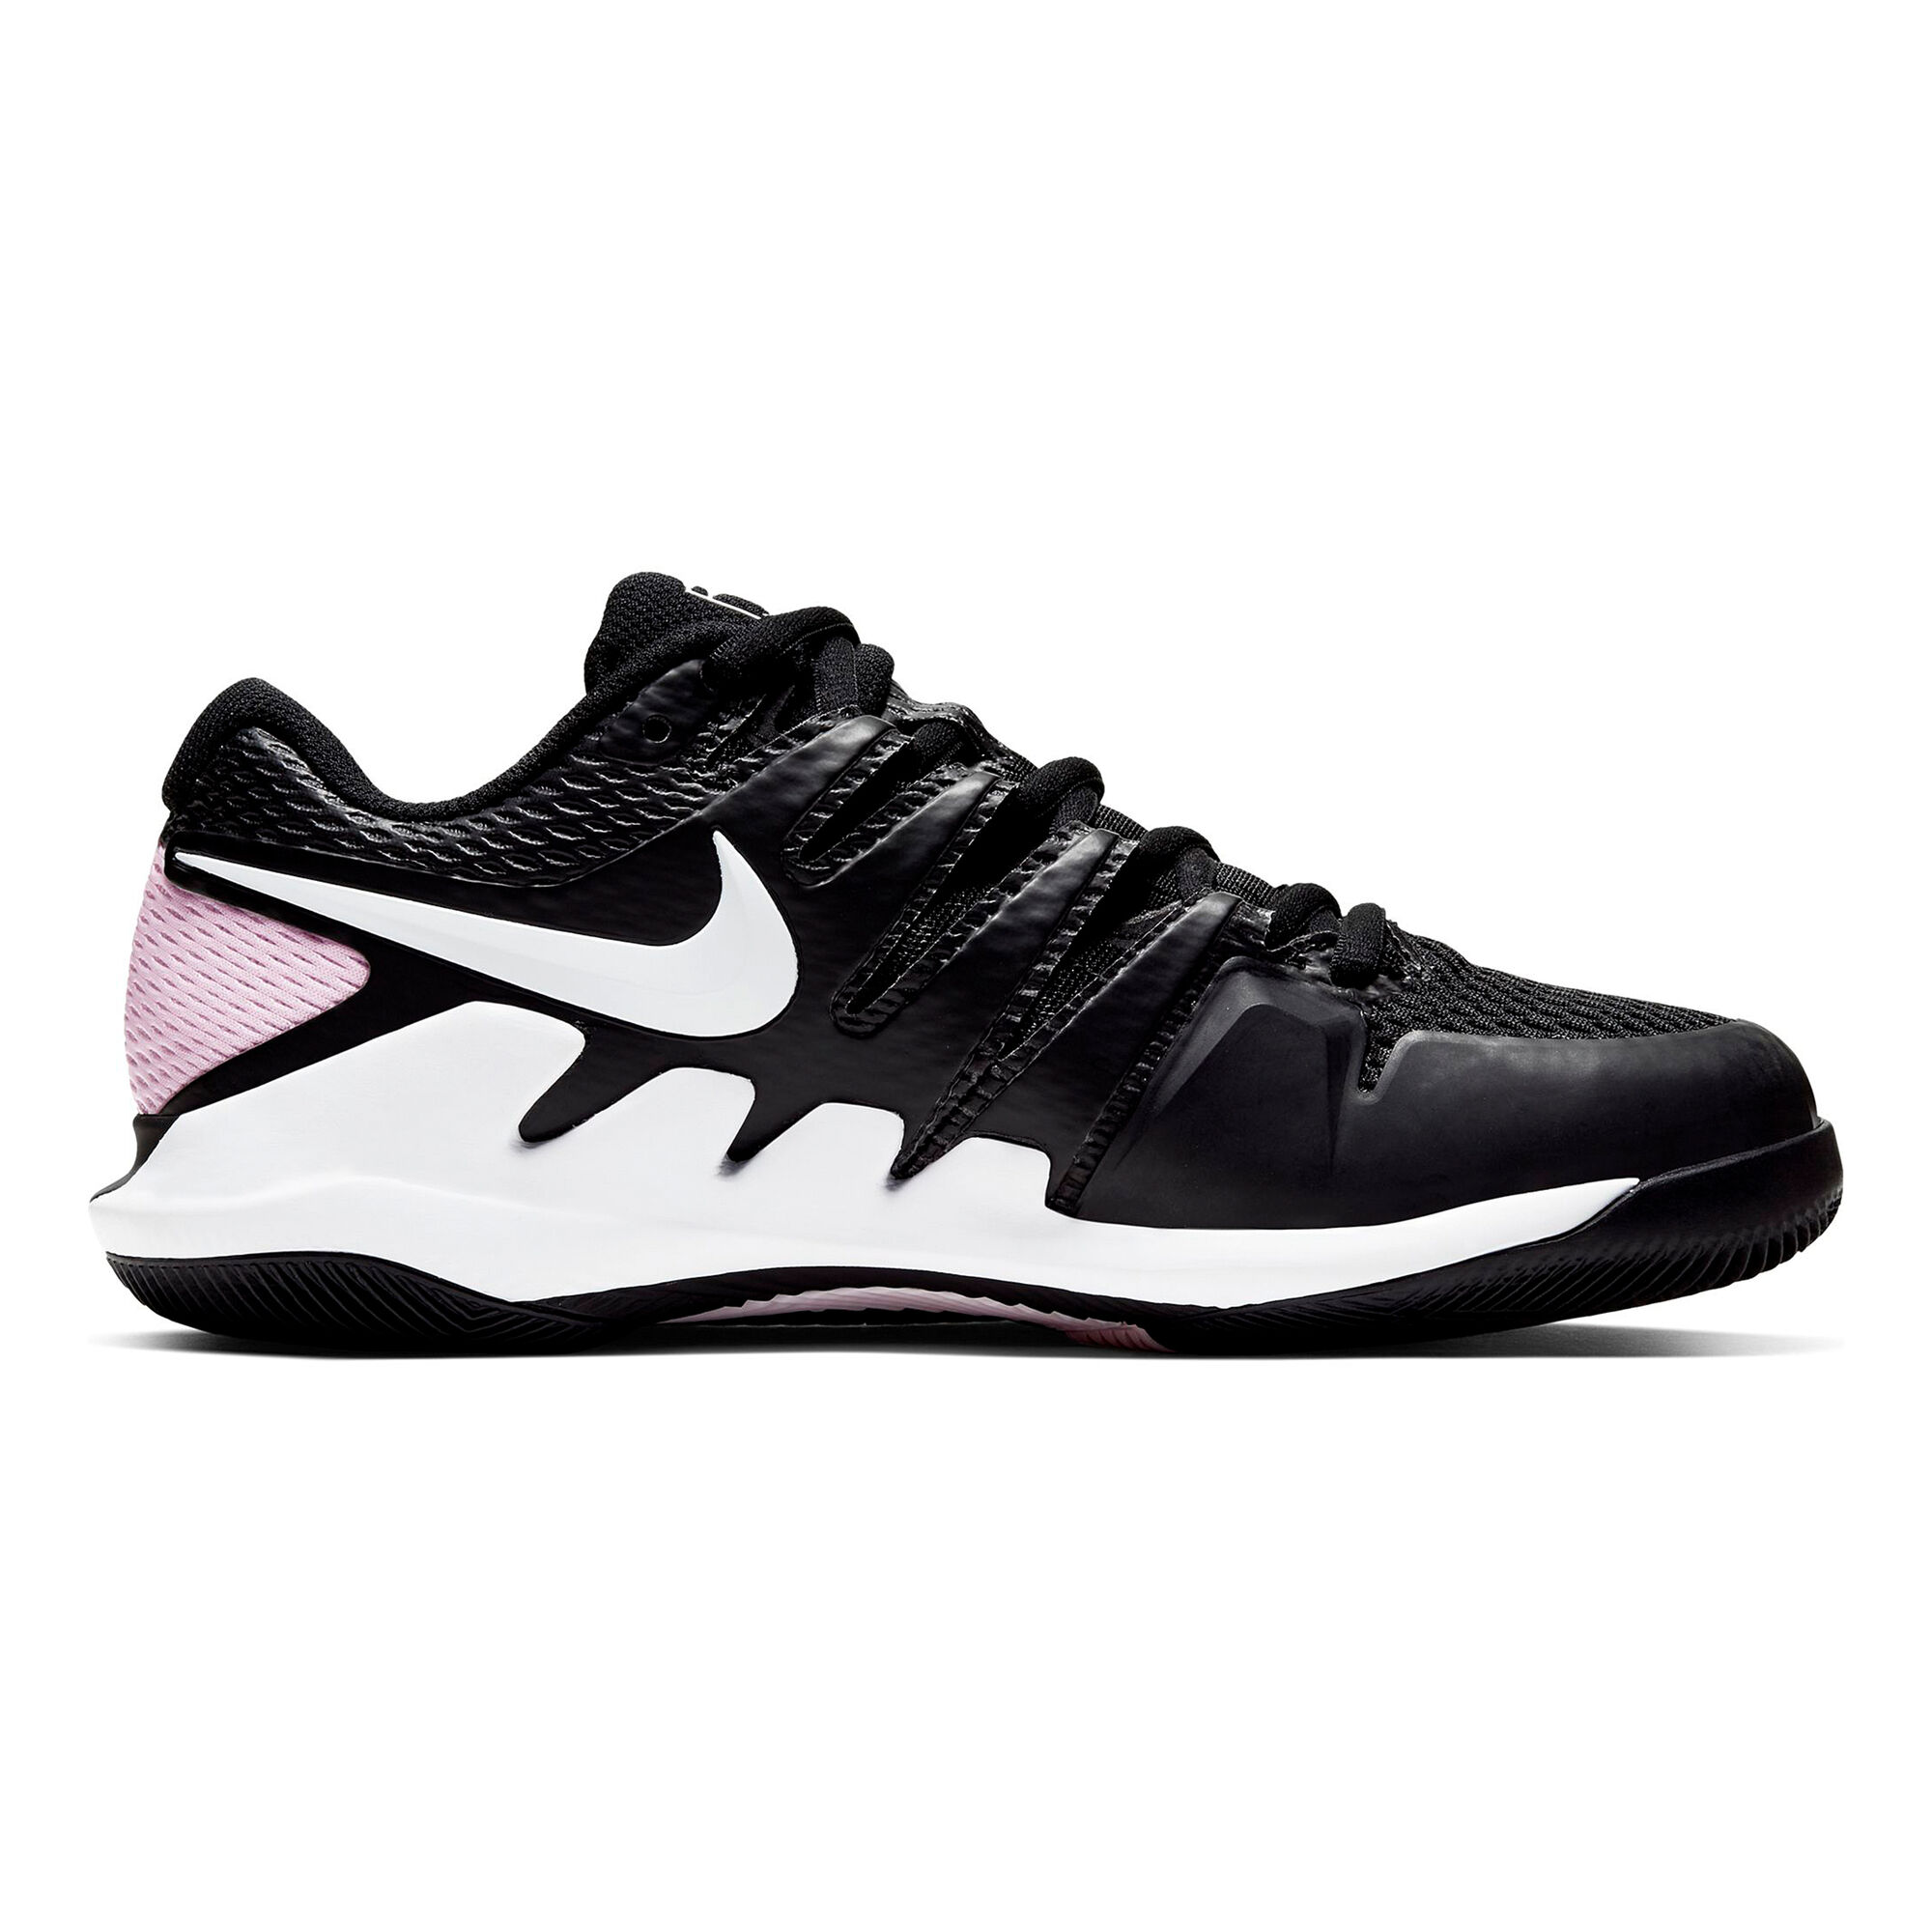 Ruwe olie Roestig pijnlijk buy Nike Air Zoom Vapor X All Court Shoe Women - Black, White online |  Tennis-Point